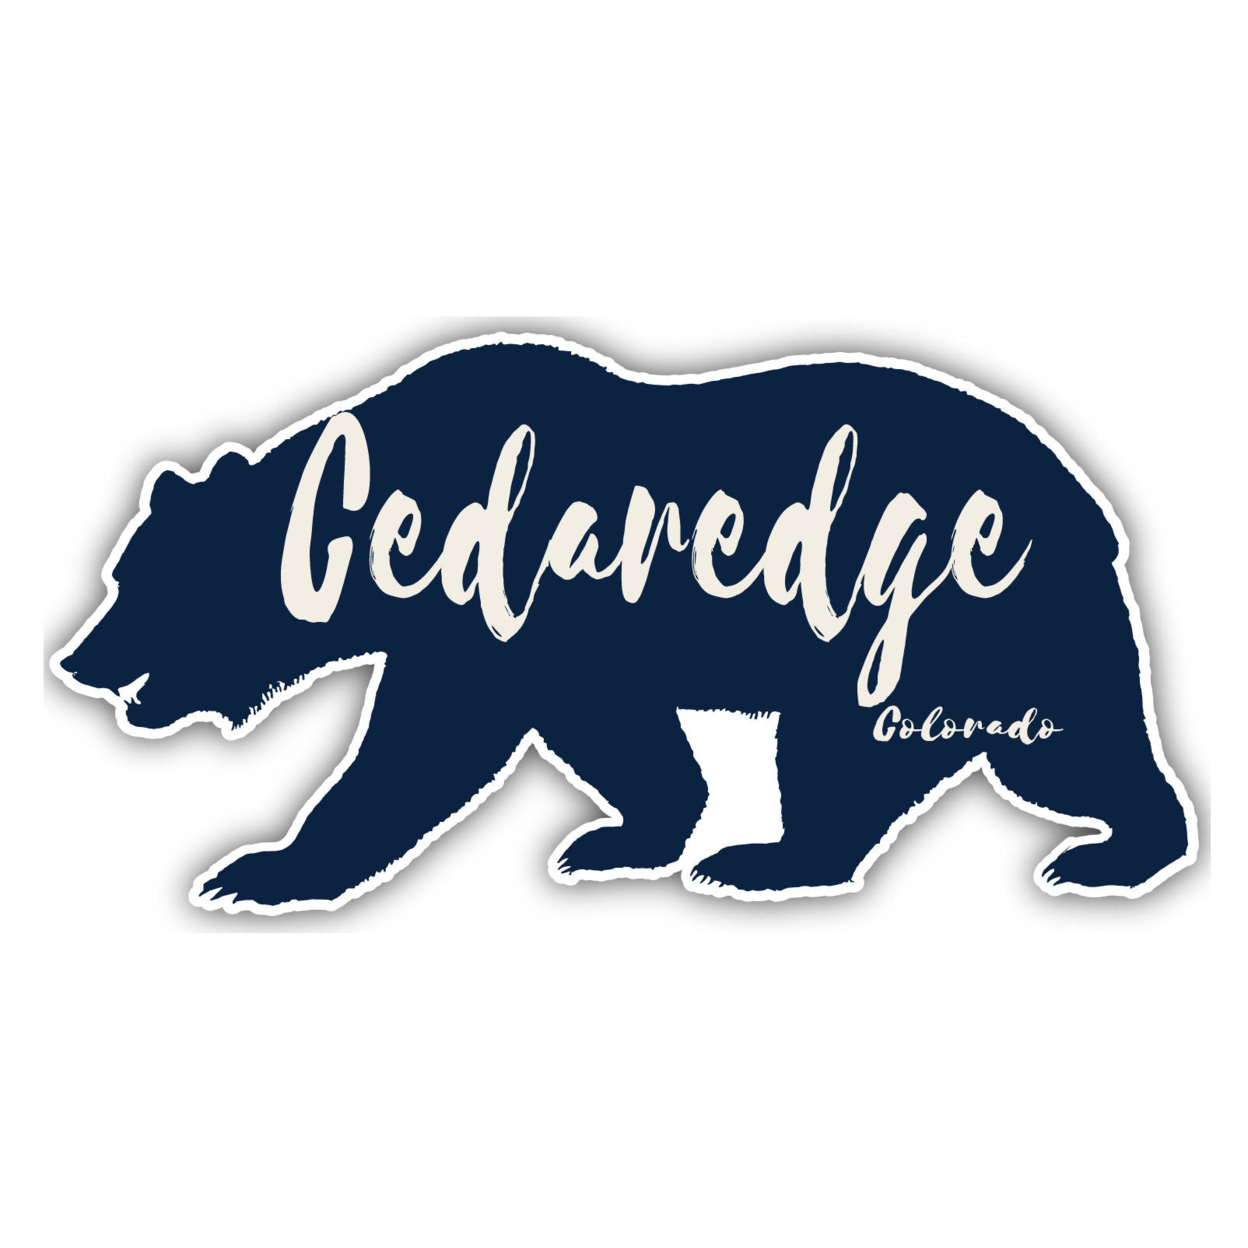 Cedaredge Colorado Souvenir Decorative Stickers (Choose Theme And Size) - 4-Pack, 4-Inch, Bear